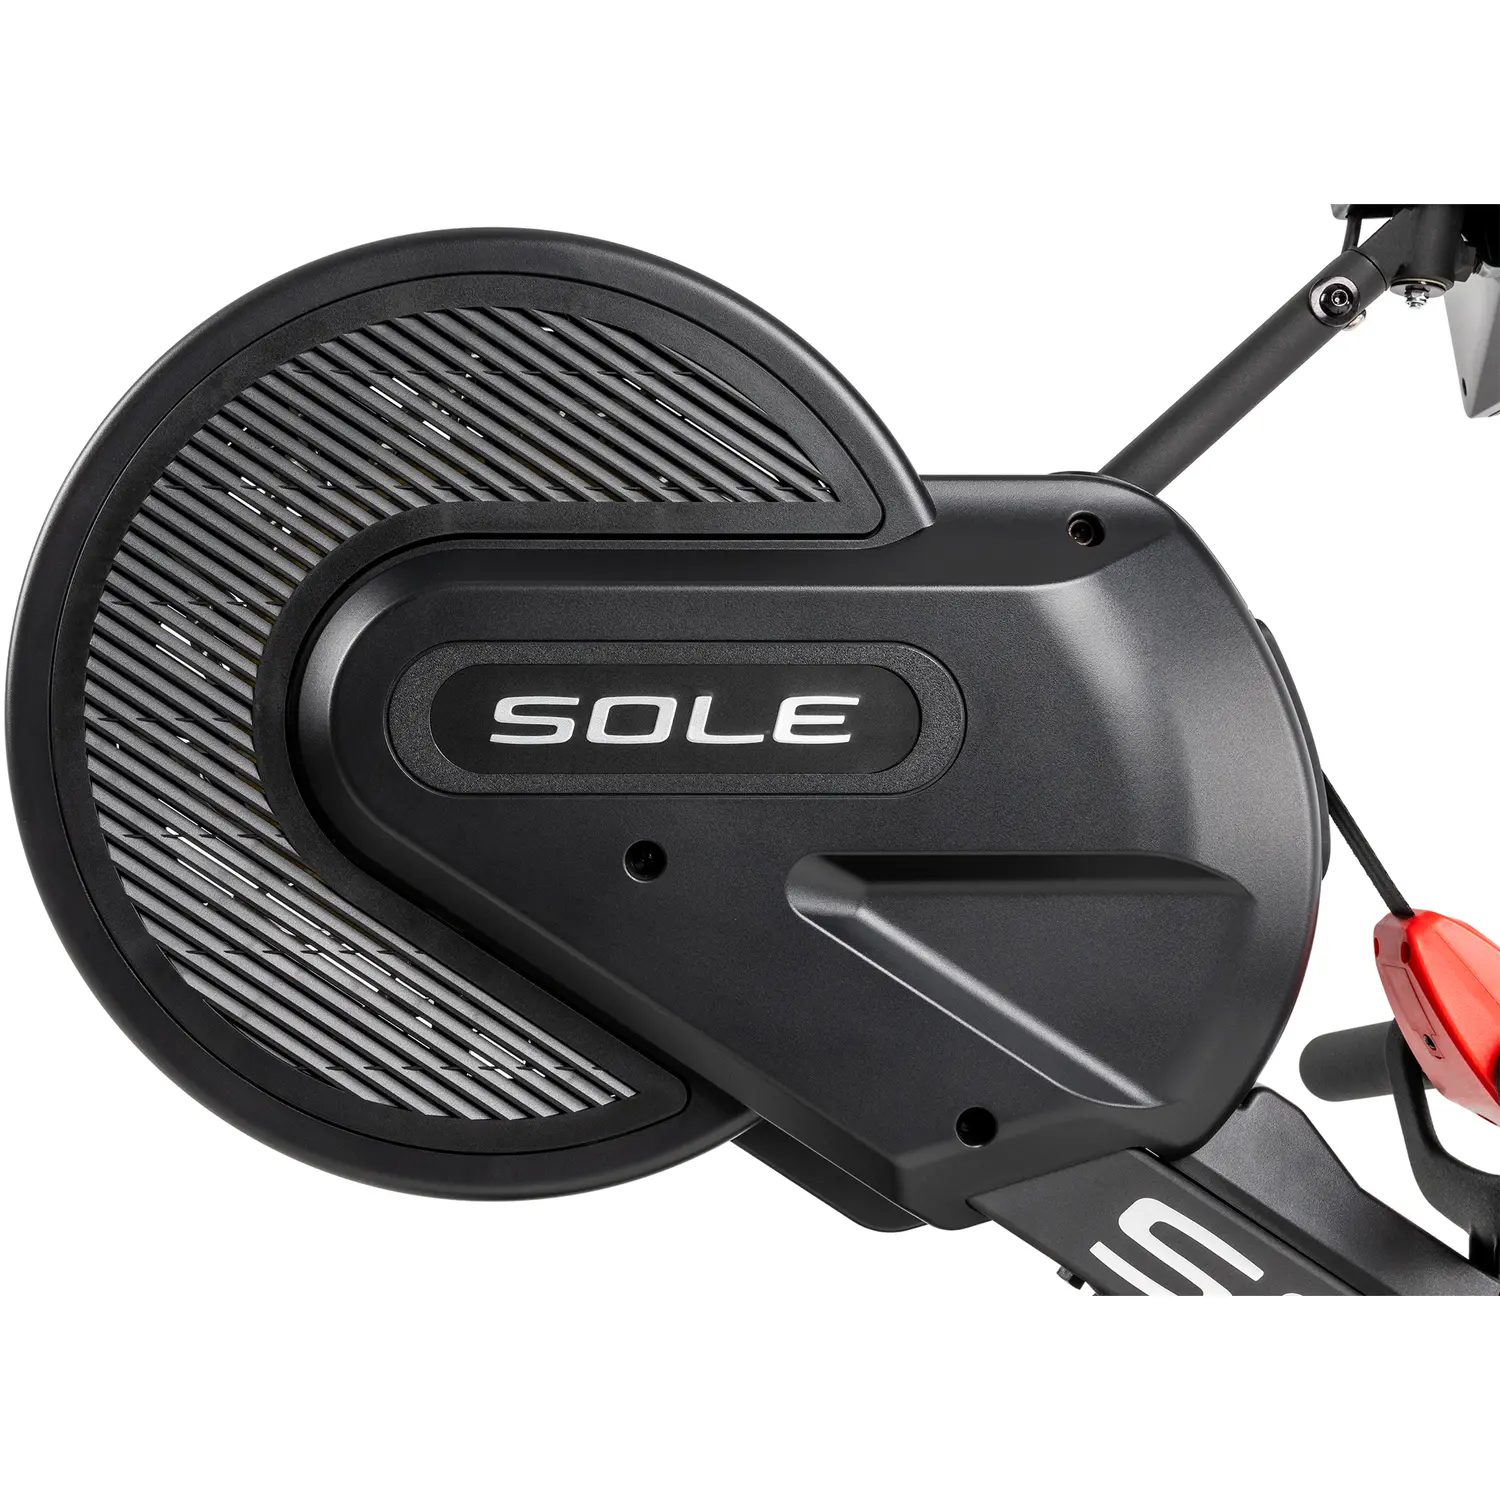 SOLE SR550 Rower Machine Touch Screen